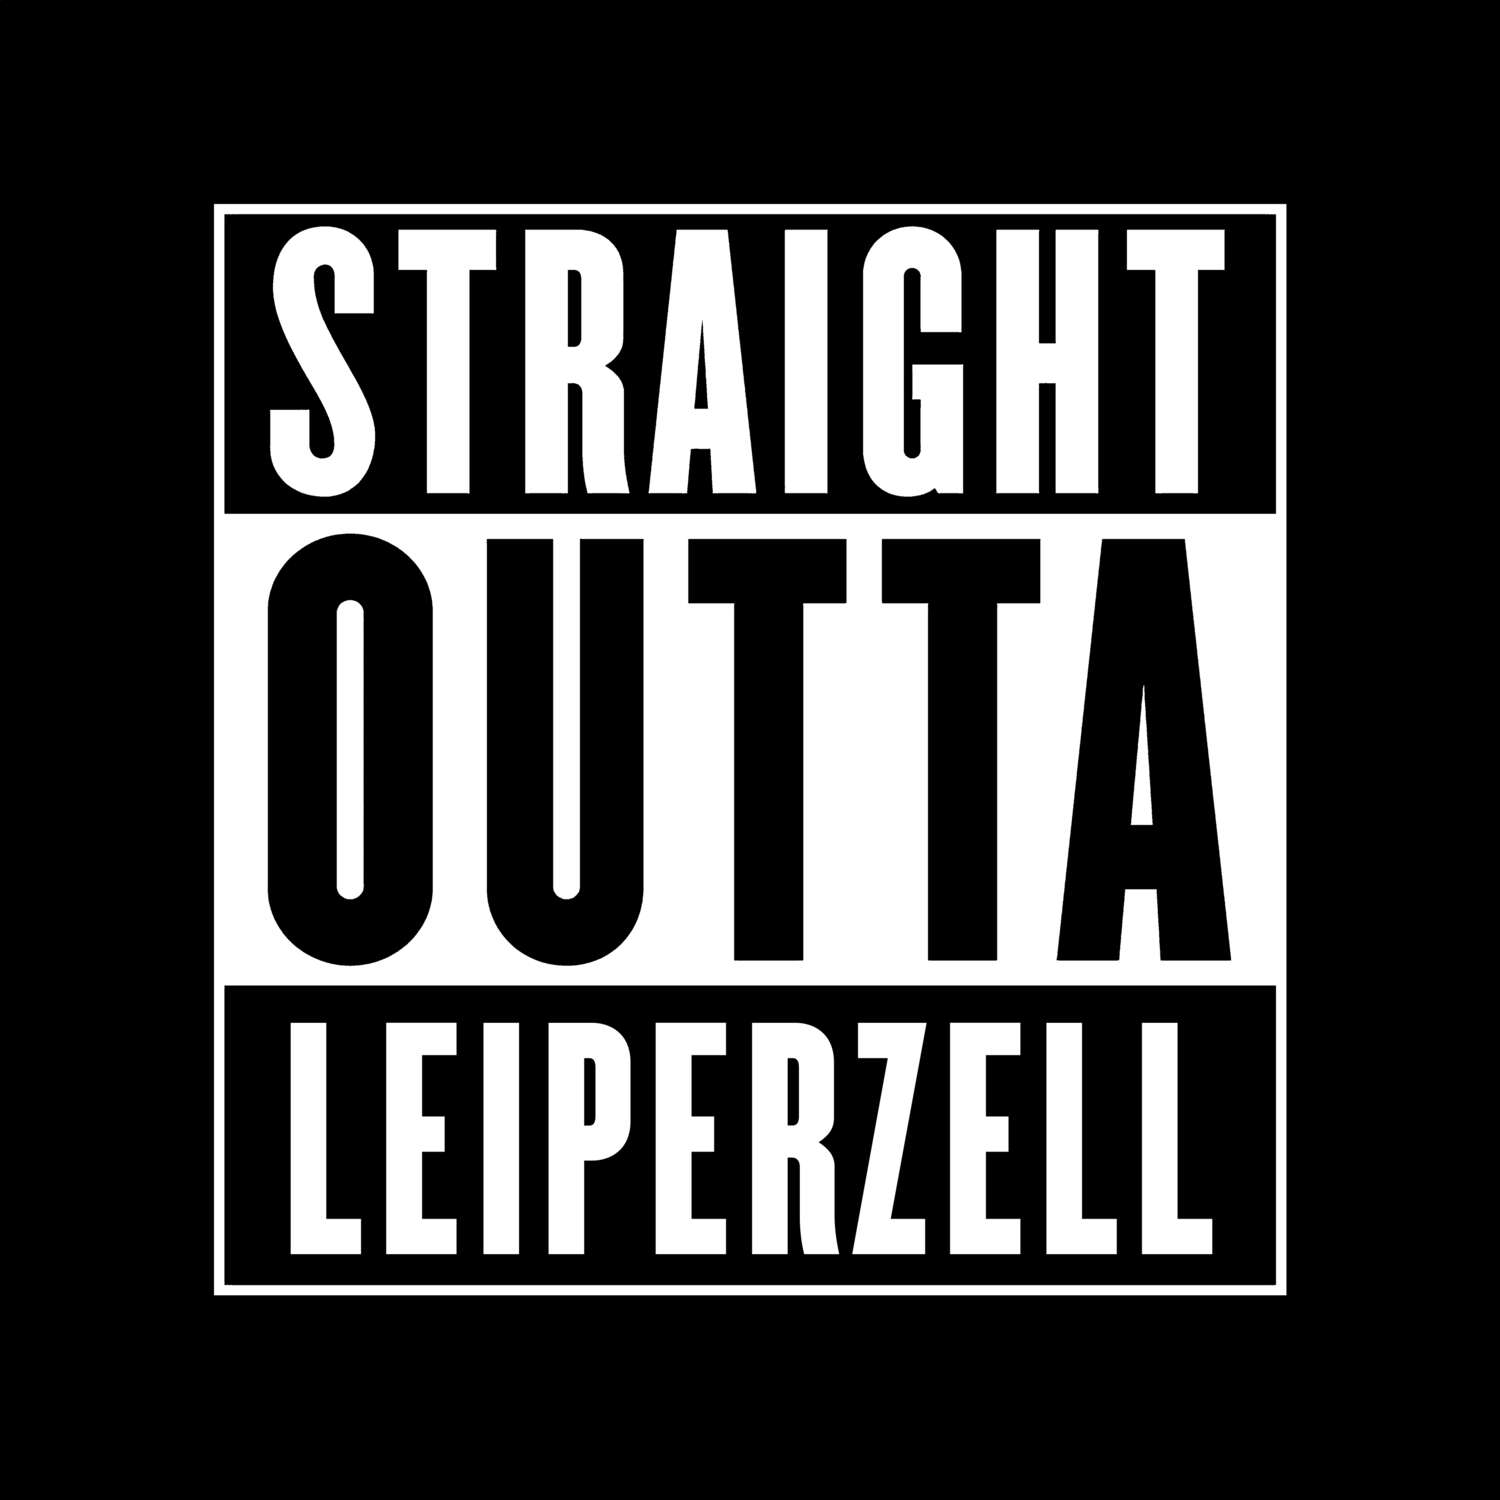 Leiperzell T-Shirt »Straight Outta«